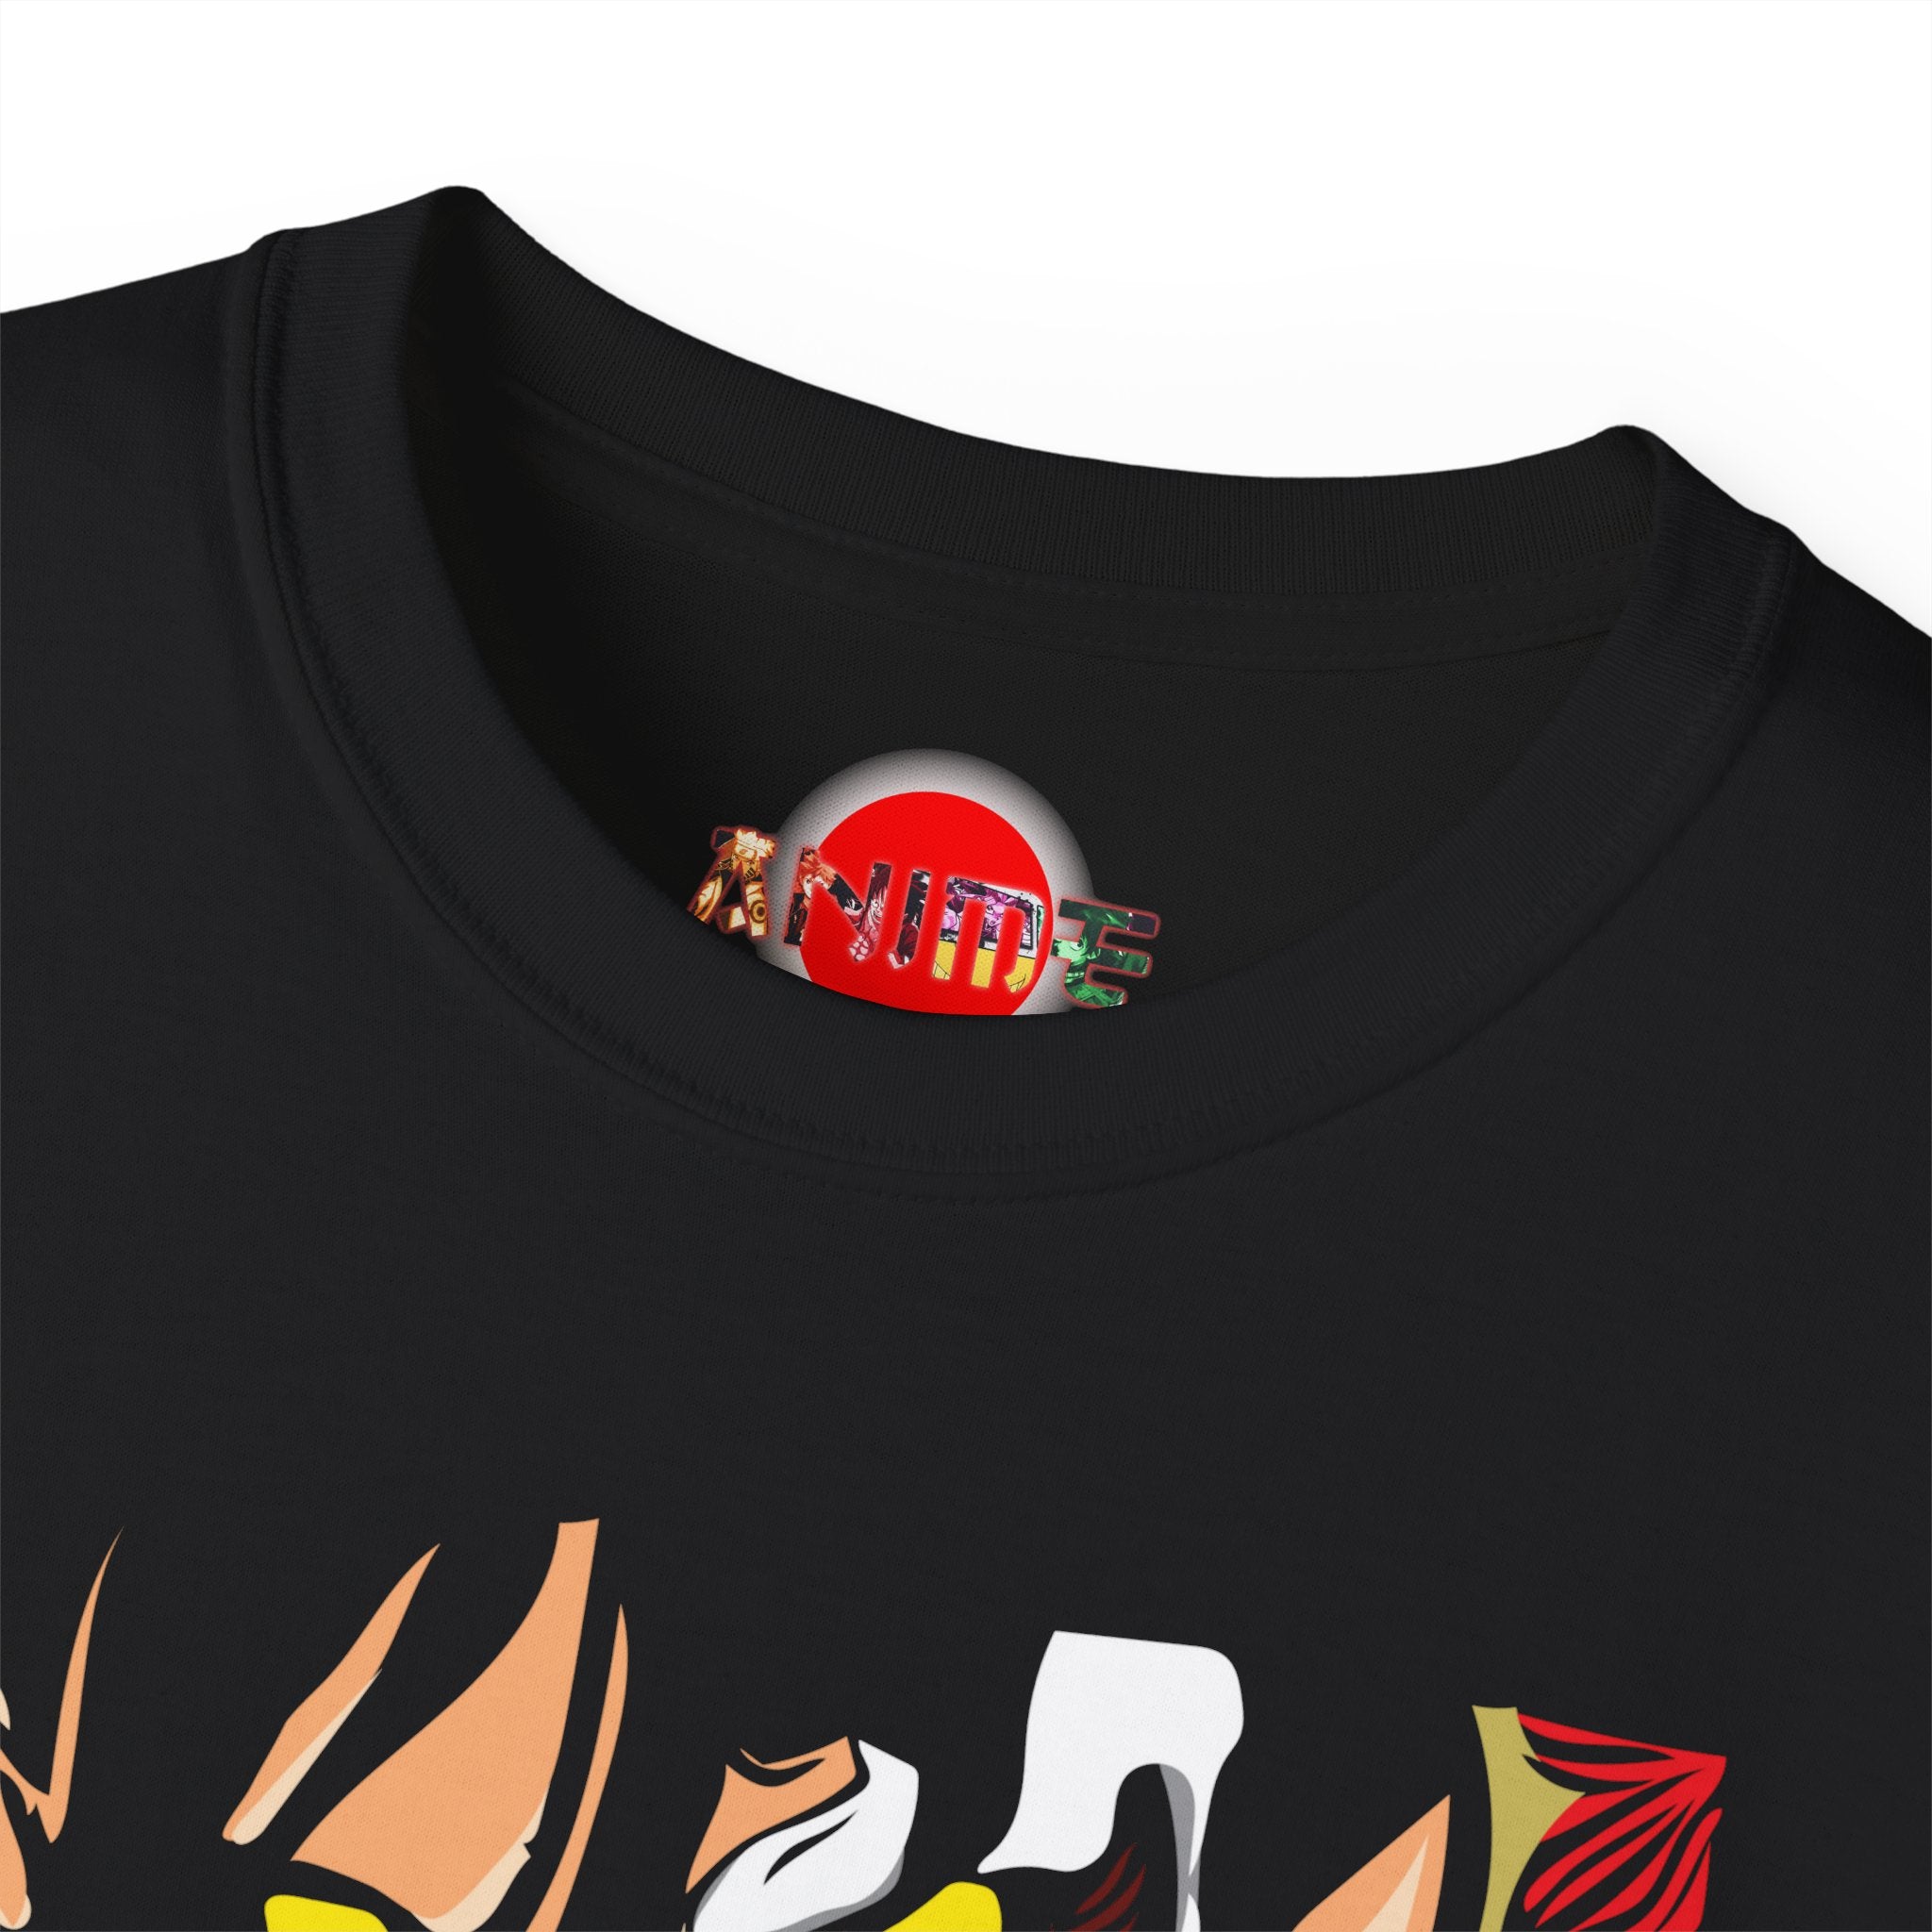 Crewneck Graphic Tees | Attack on Titans Shirt | Japanese Anime World